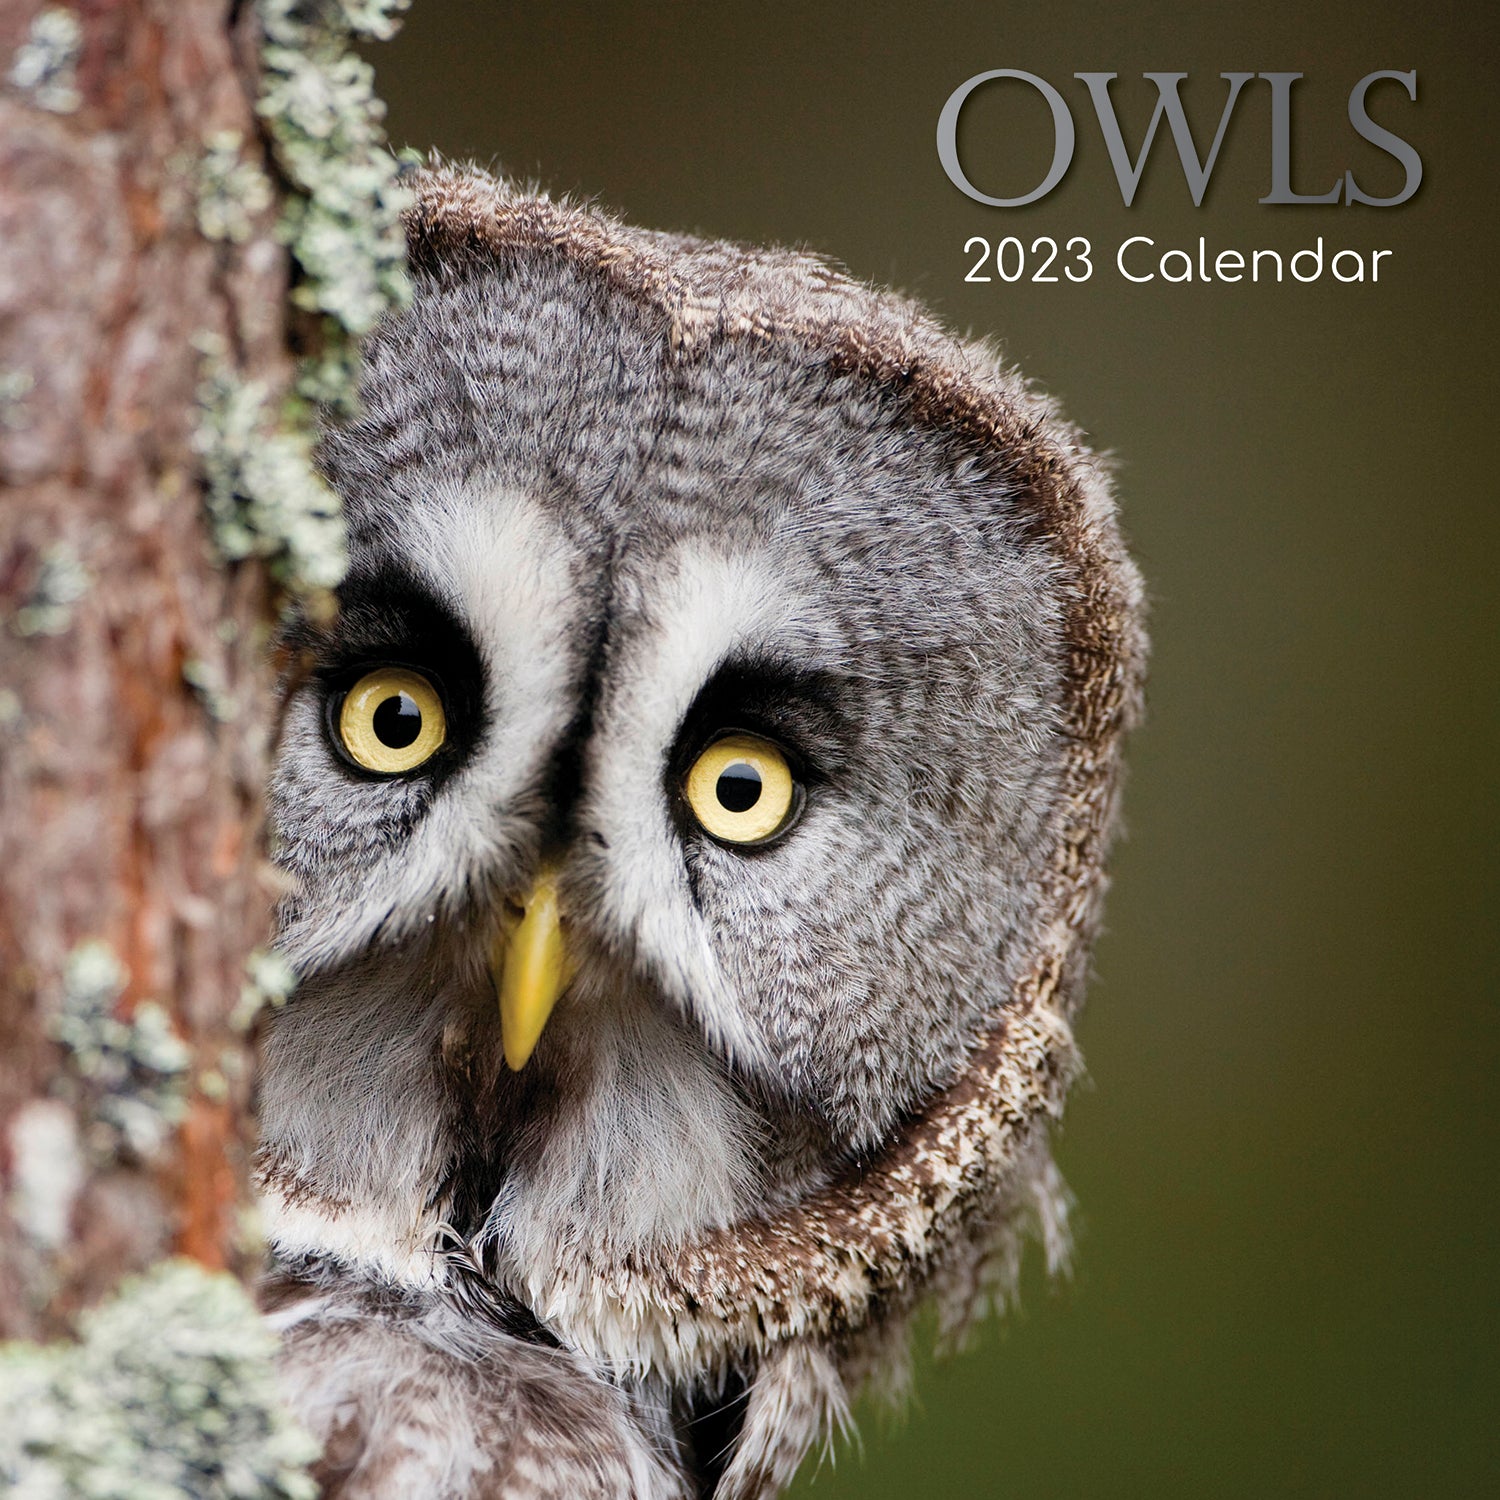 Owls 2023 Square Wall Calendar Pets Animals 16 Months New Year Christmas Planner - Zmart Australia